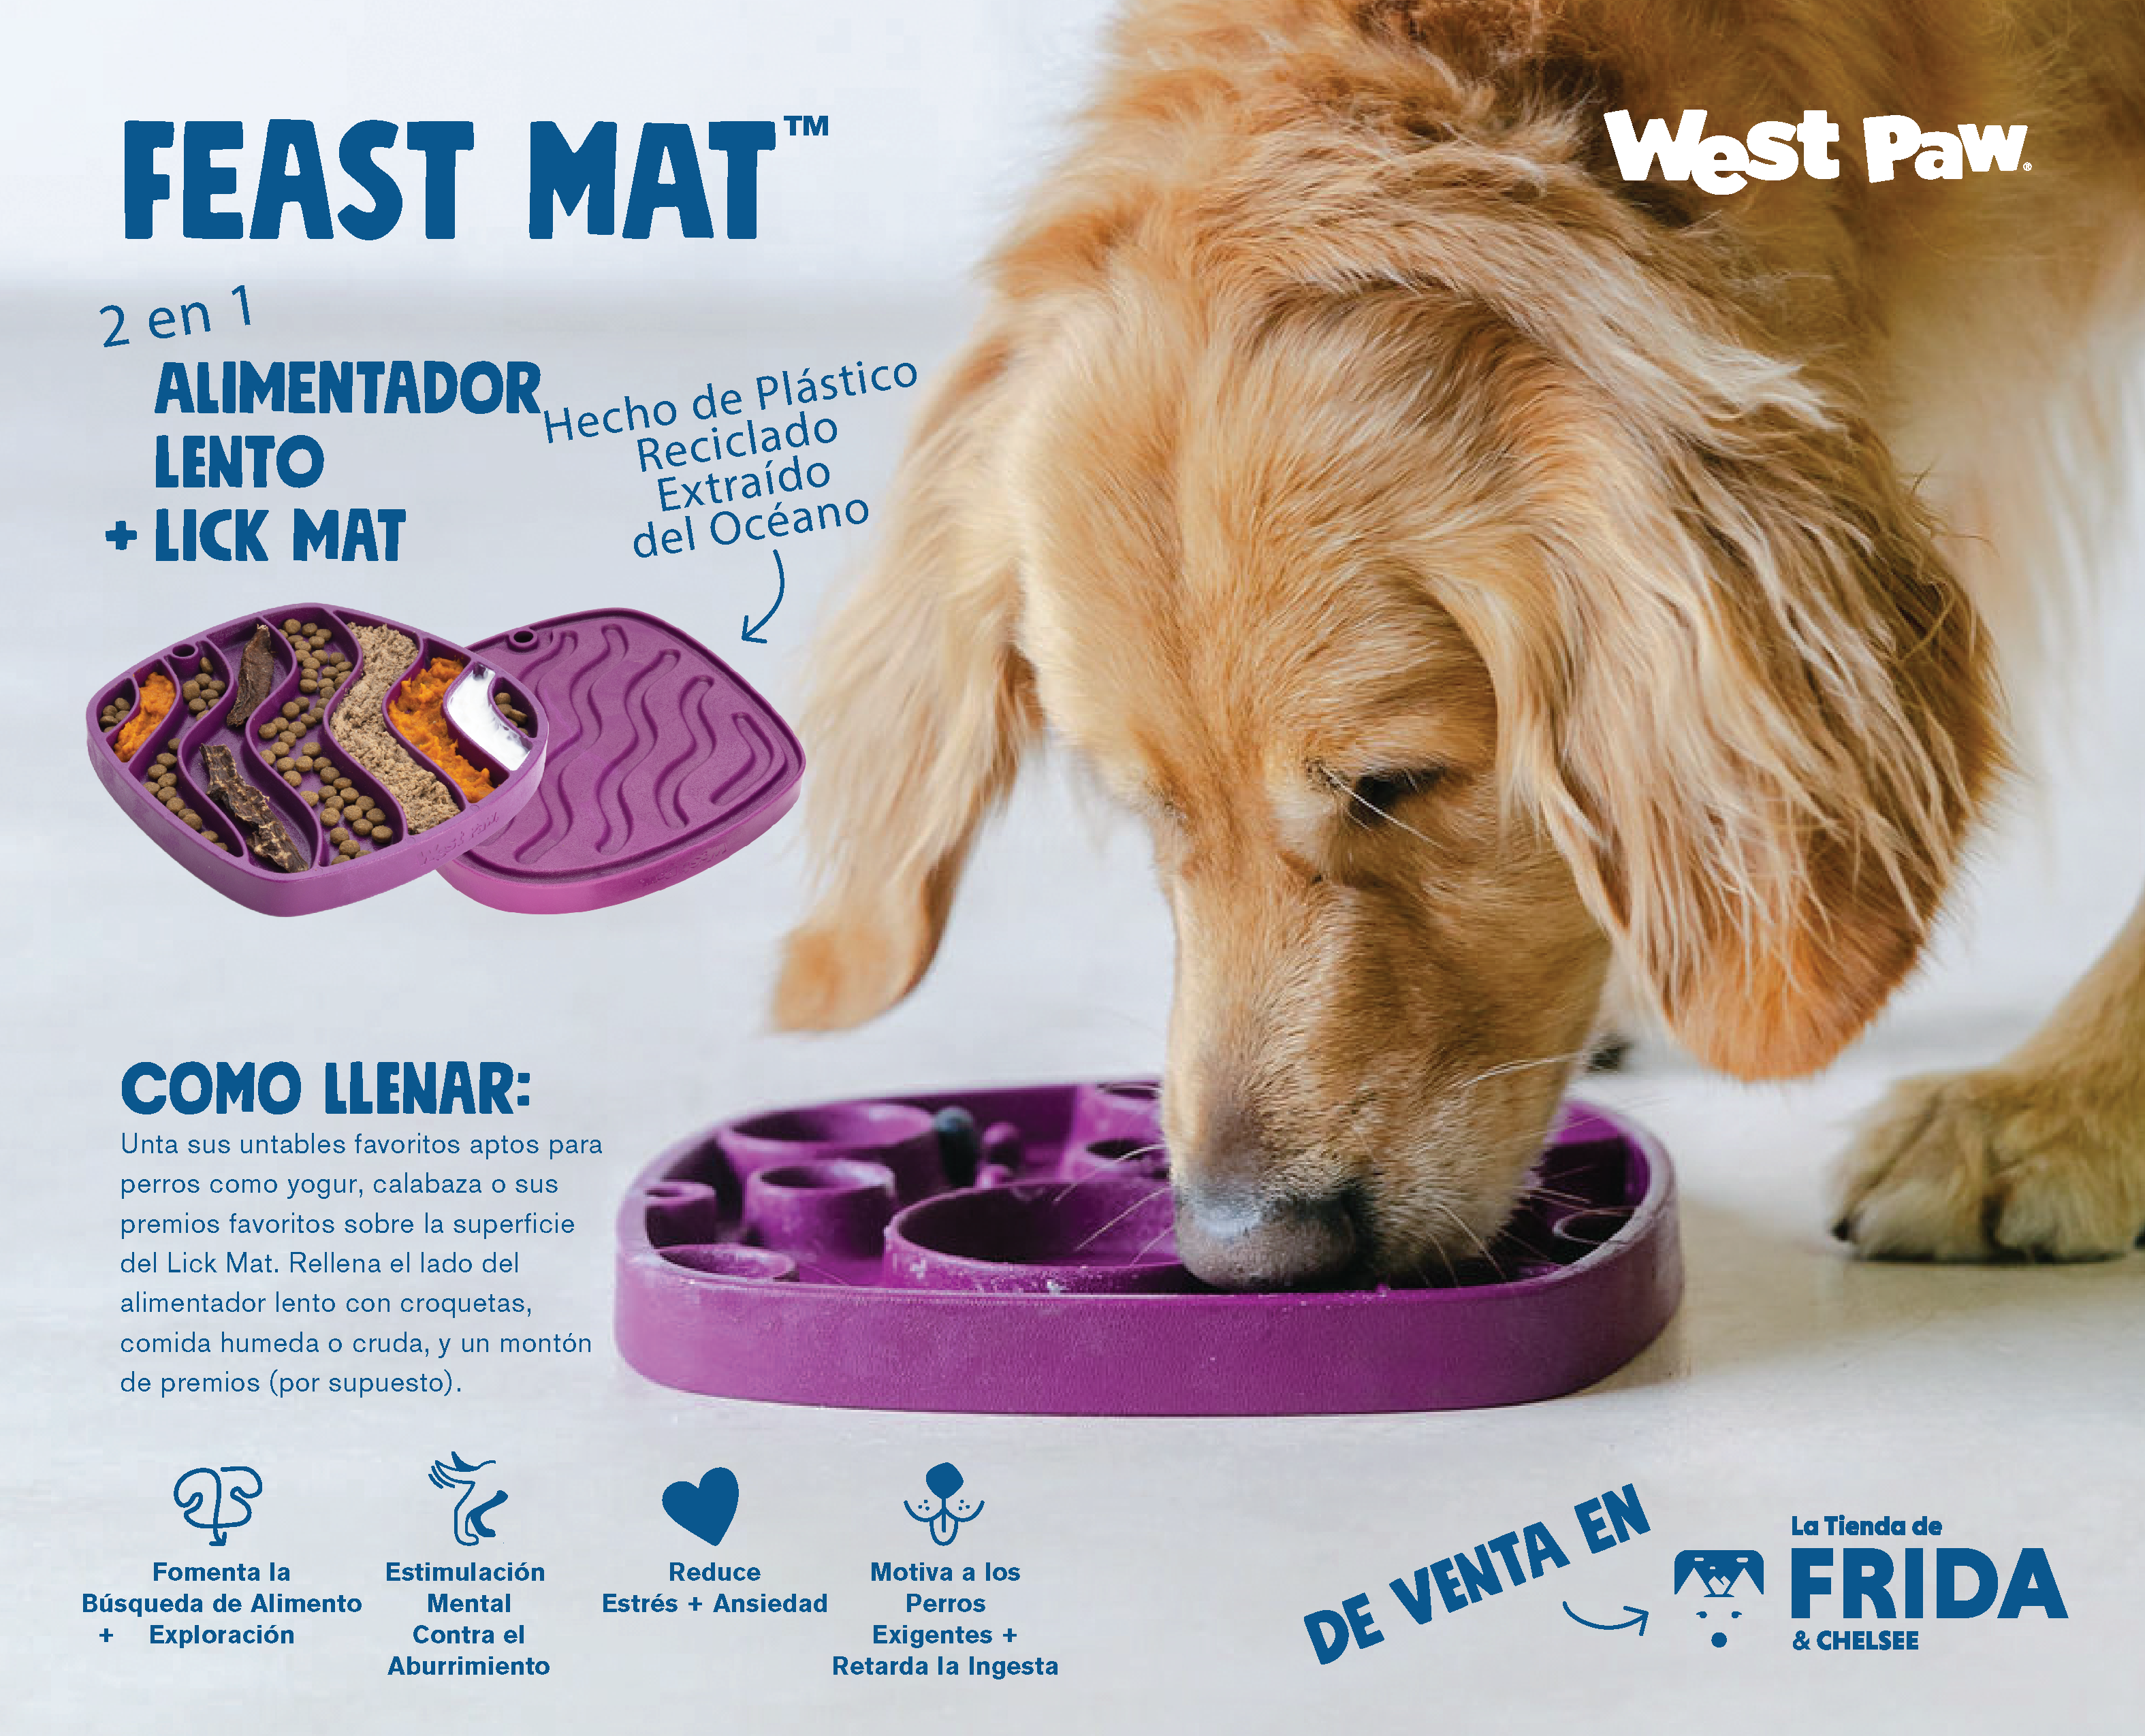 Feast Mat: Alimentador Lento y Lick Mat Azul - Tapete de Lamedura Todo en Uno de West Paw